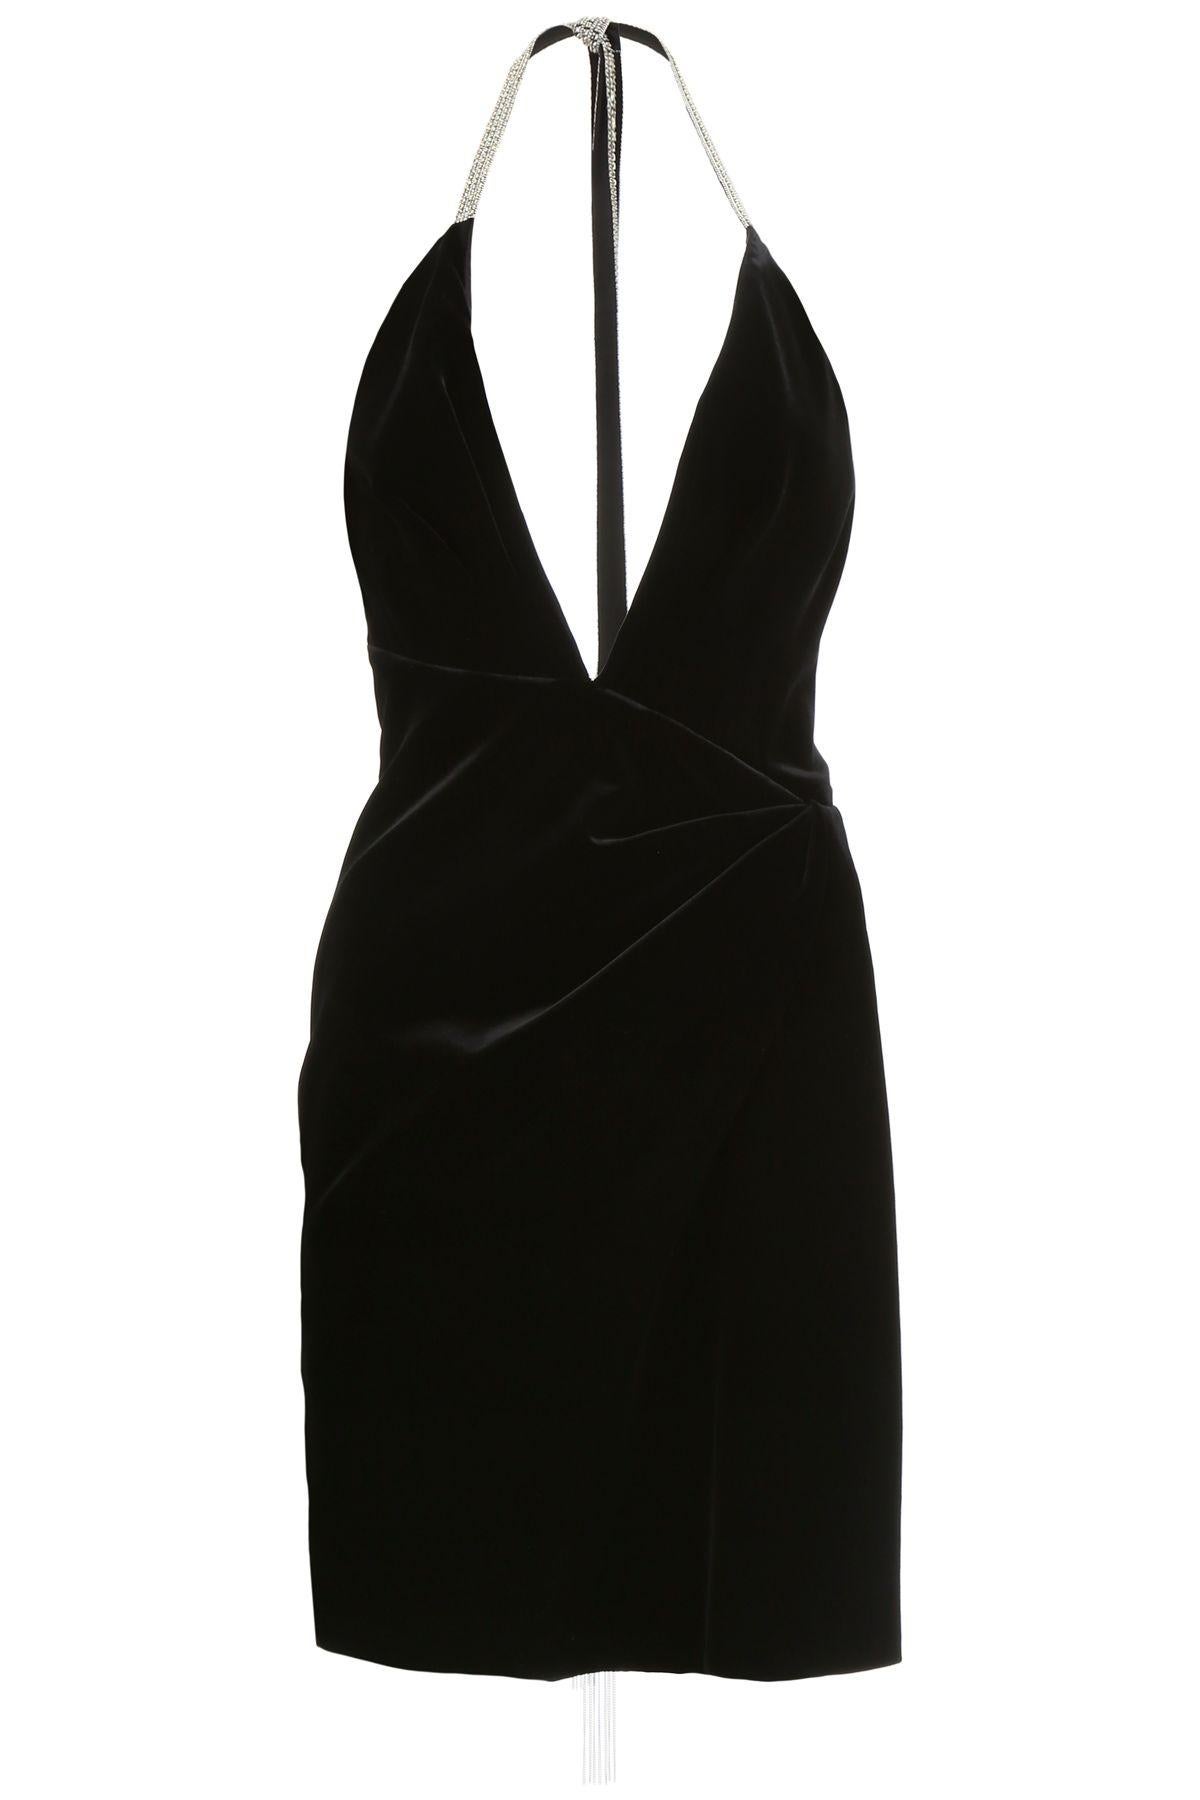 Saint Laurent Plunging Black Velvet Mini Dress with Crystal Straps Size 38 1